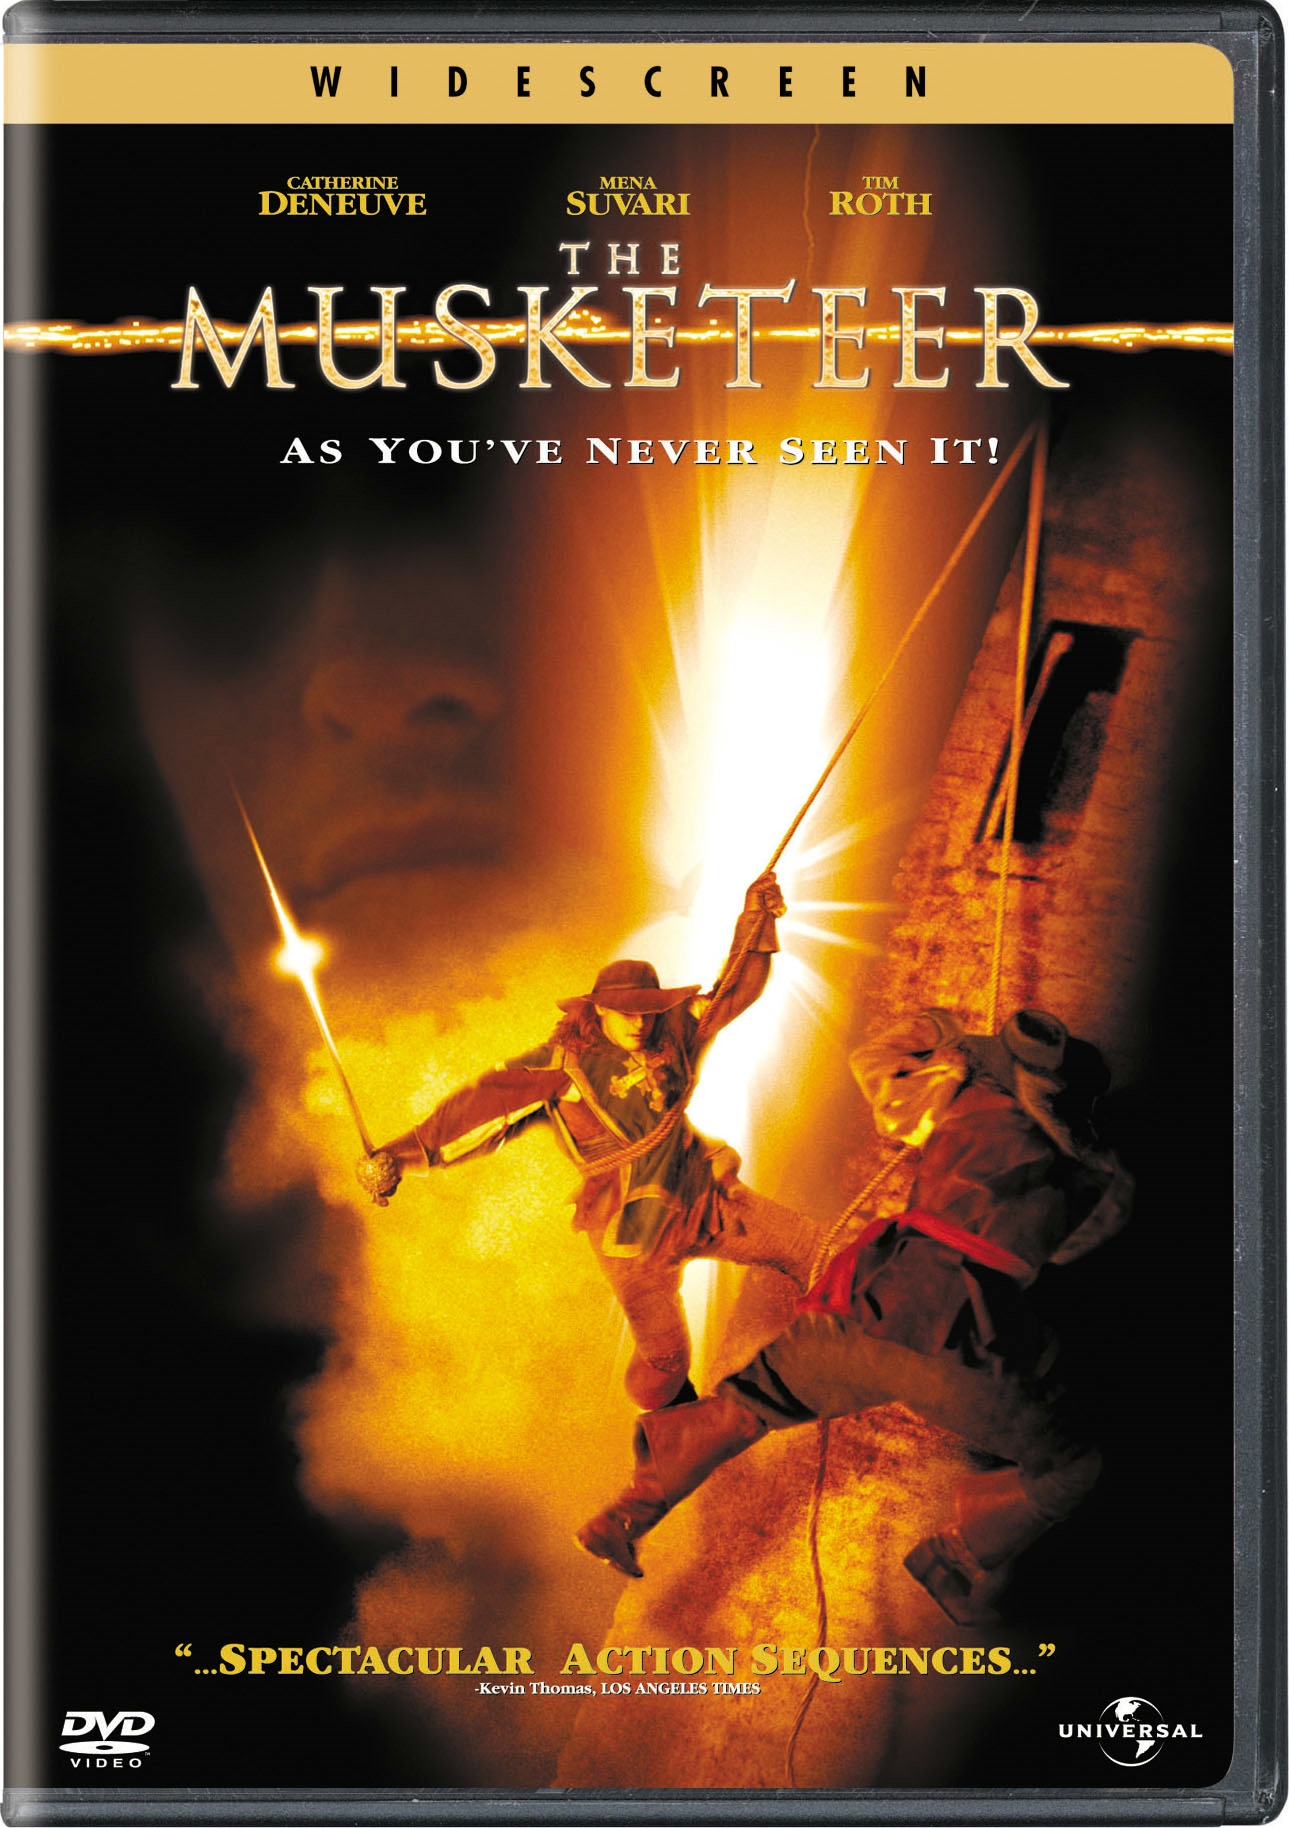 The Musketeer - DVD [ 2001 ]  - Adventure Movies On DVD - Movies On GRUV